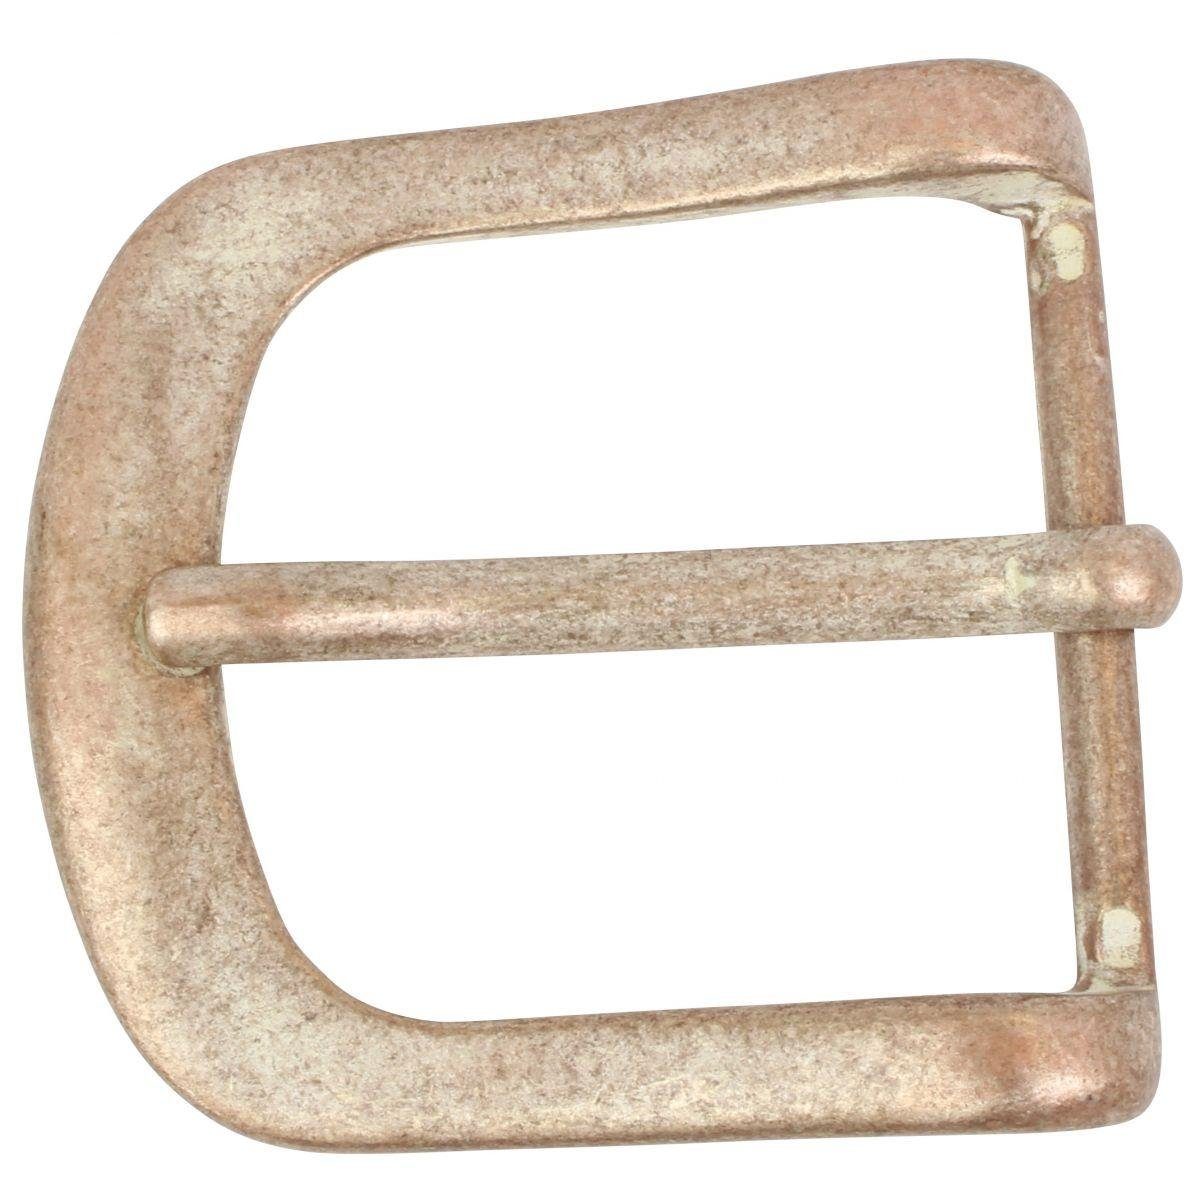 cm - - Gürtel 4,0 Wechselschließe BELTINGER Gürtelschnalle Rame - 40mm Gürtelschließe Dorn-Schließe